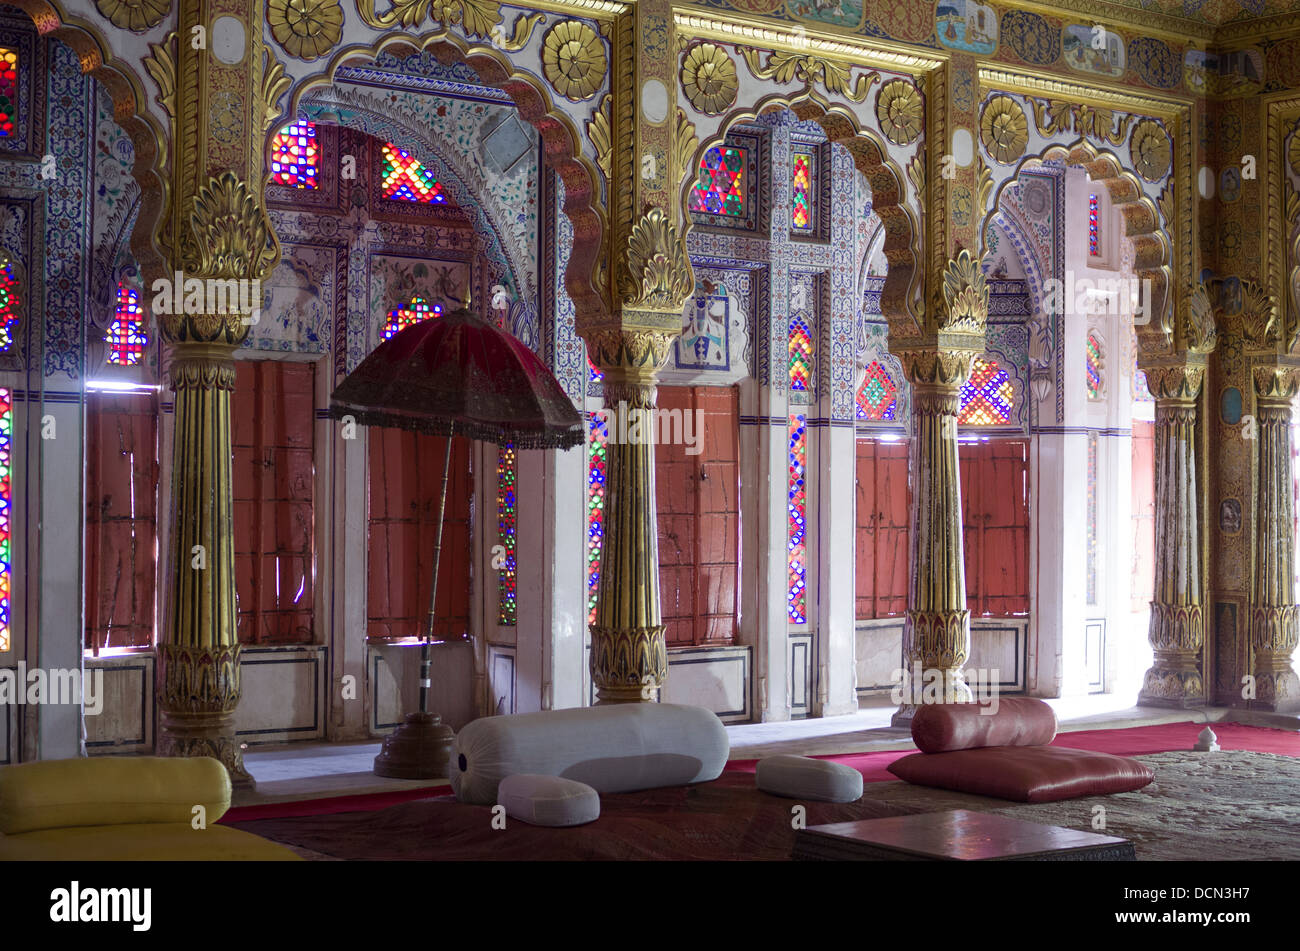 Meherangarh Fort  Palace Comlex interior - Jodhpur, Rajashtan, India Stock Photo